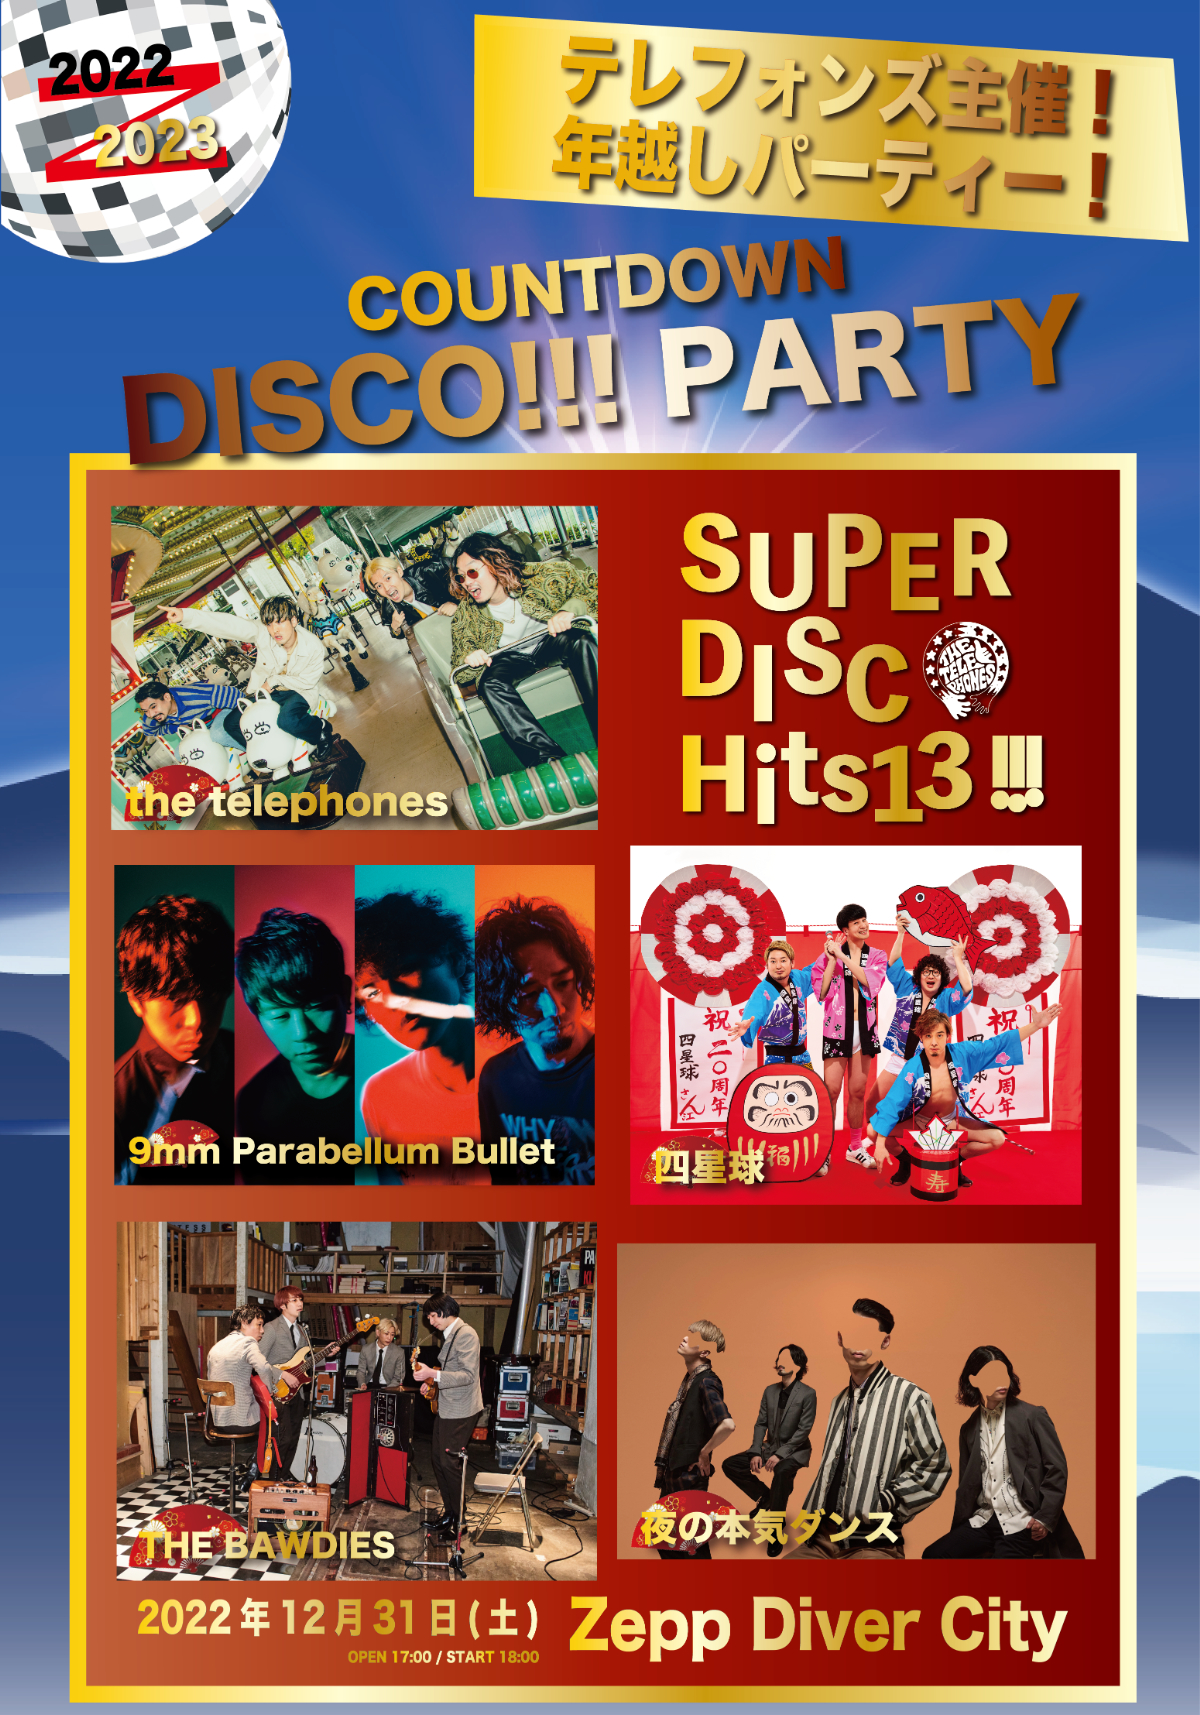 「SUPER DISCO Hits13!!!~COUNTDOWN DISCO!!! PARTY~」